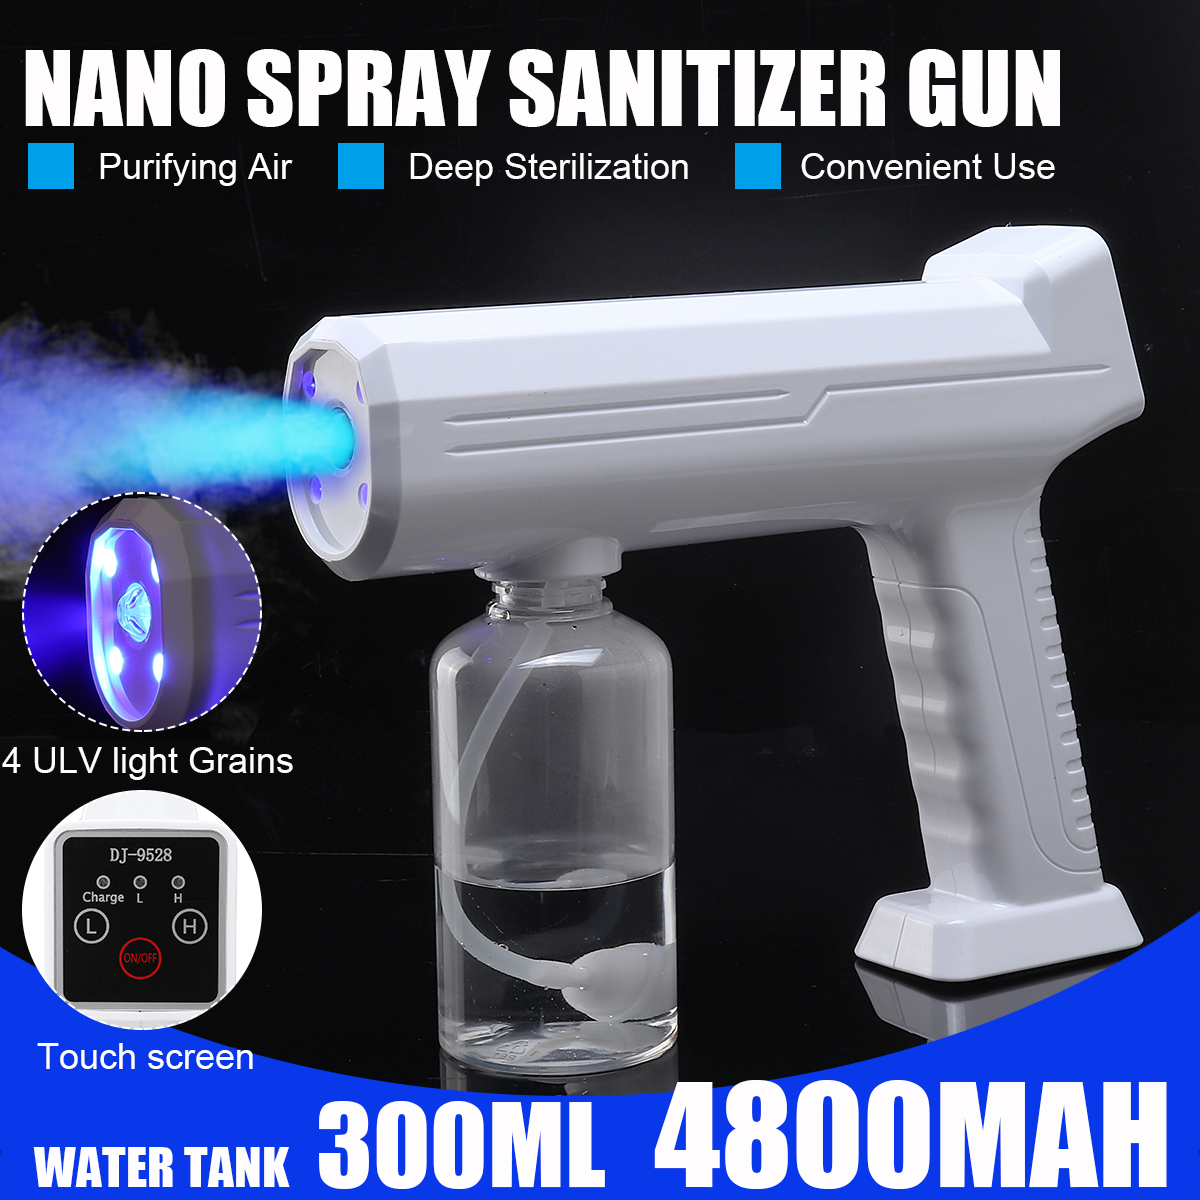 Electric-Spray-Guns-Spray-Machine-Wireless-Electric-Sanitizer-330ML-Sprayer-Disinfects-Blue-Light-St-1903062-2